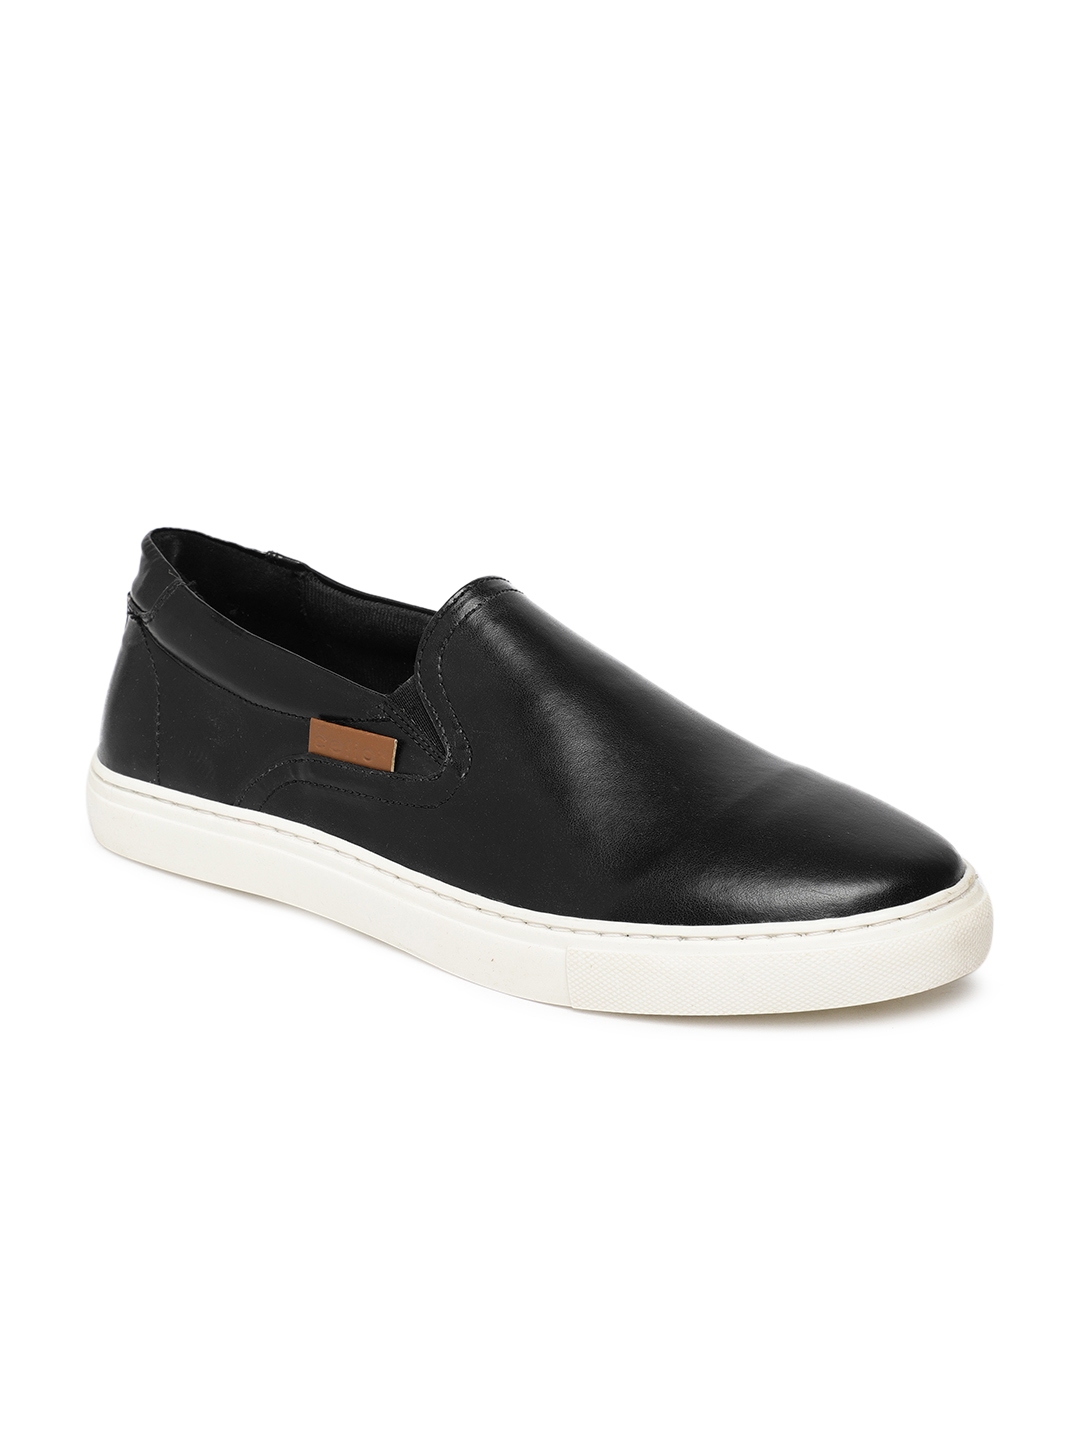 Buy Celio Men Black Slip On Sneakers - Casual Shoes for Men 9041205 ...